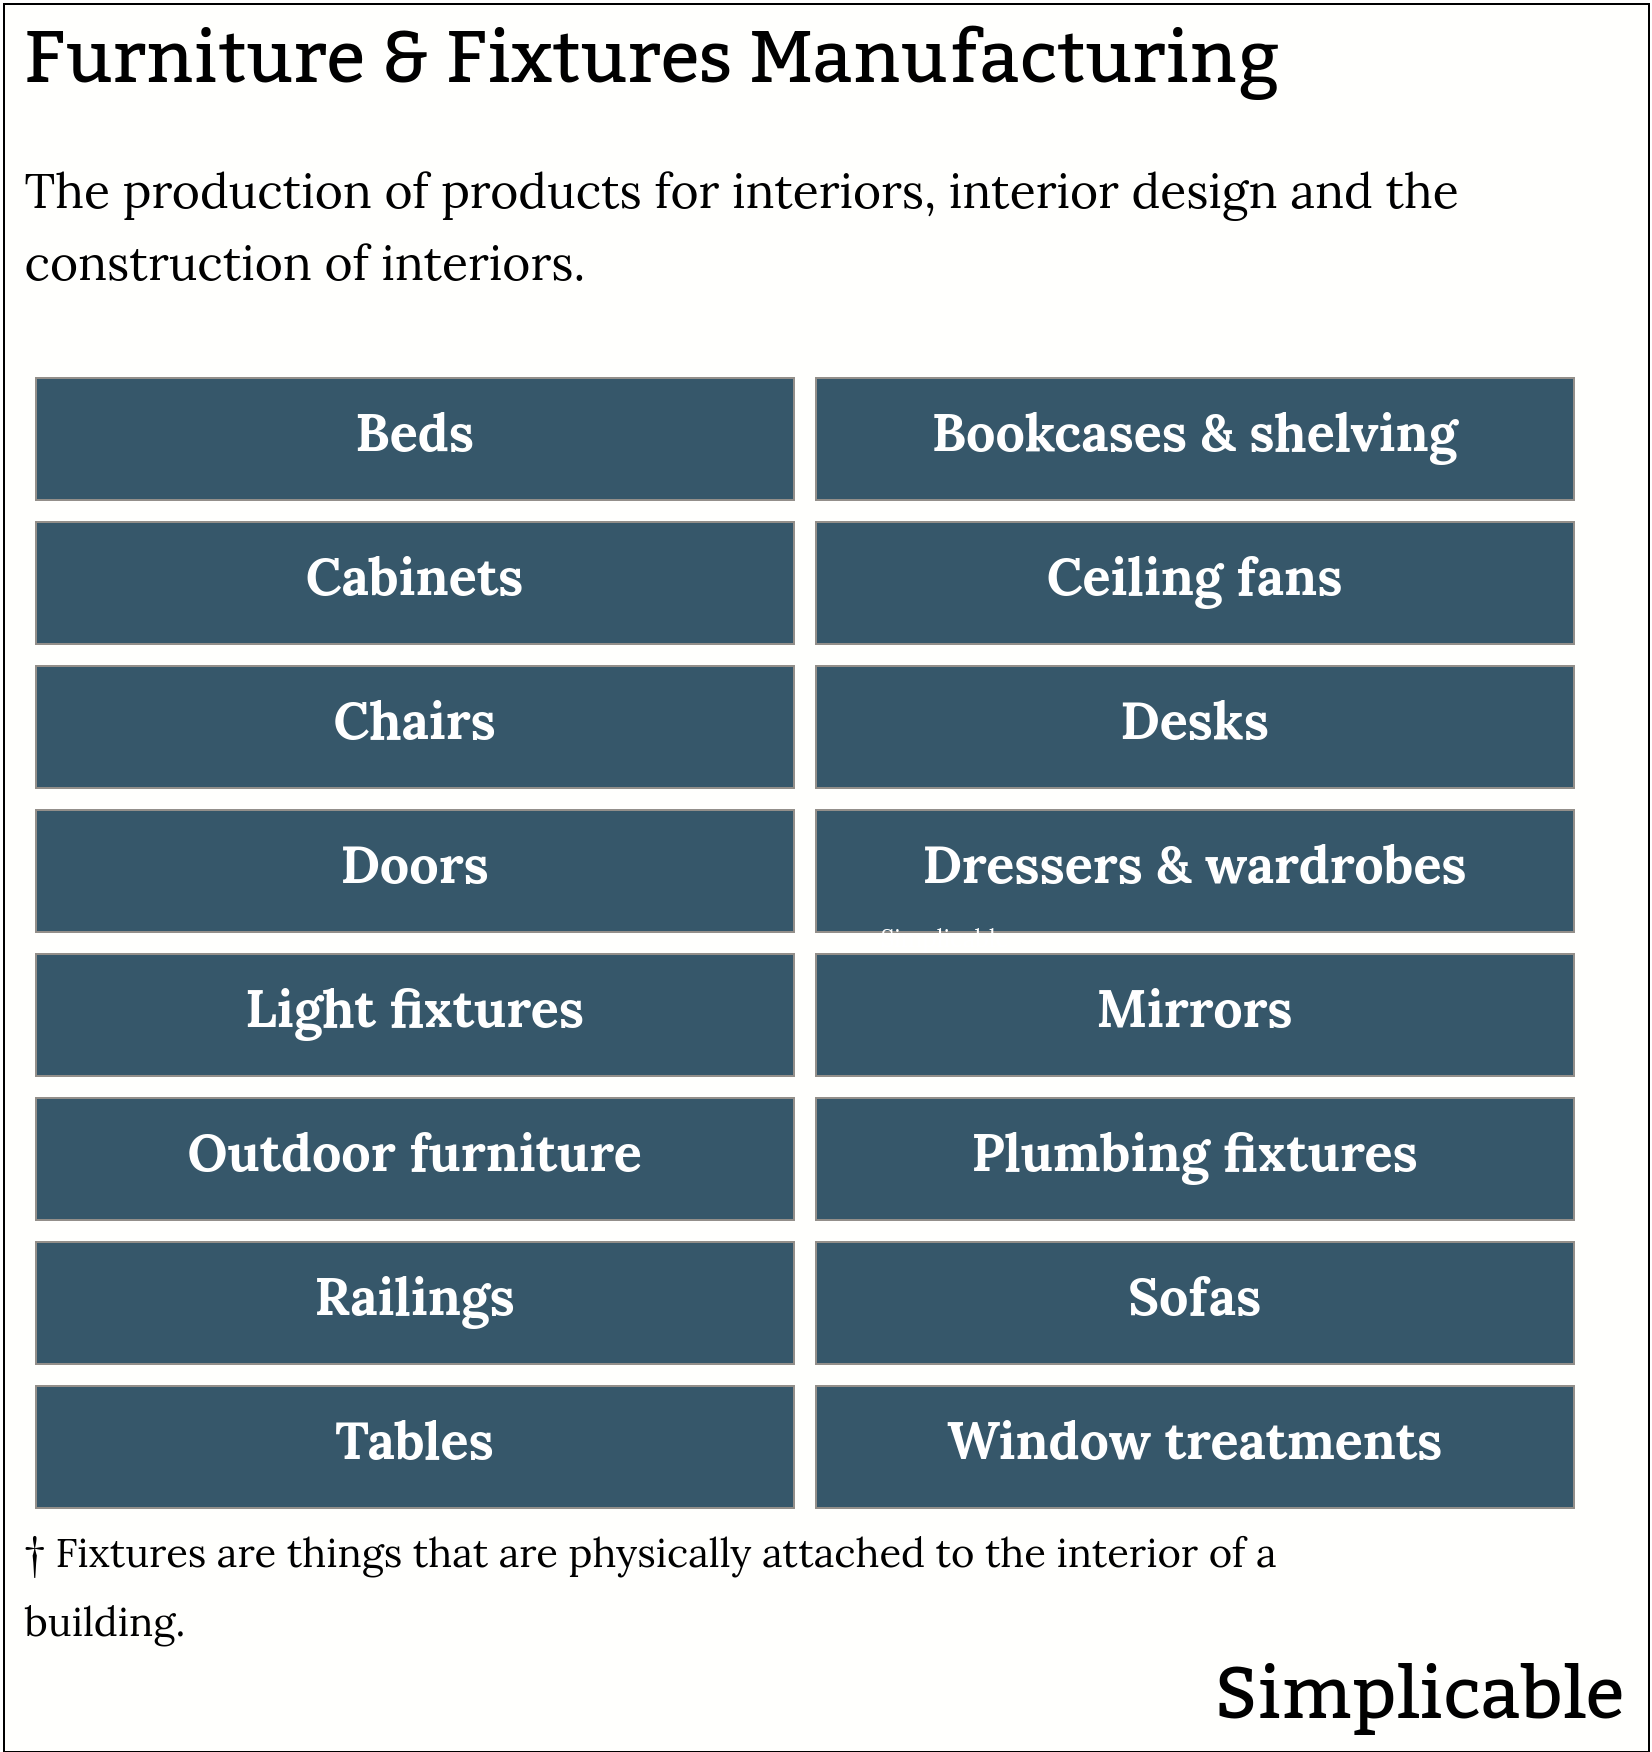 furniture fixtures manufacturing examples